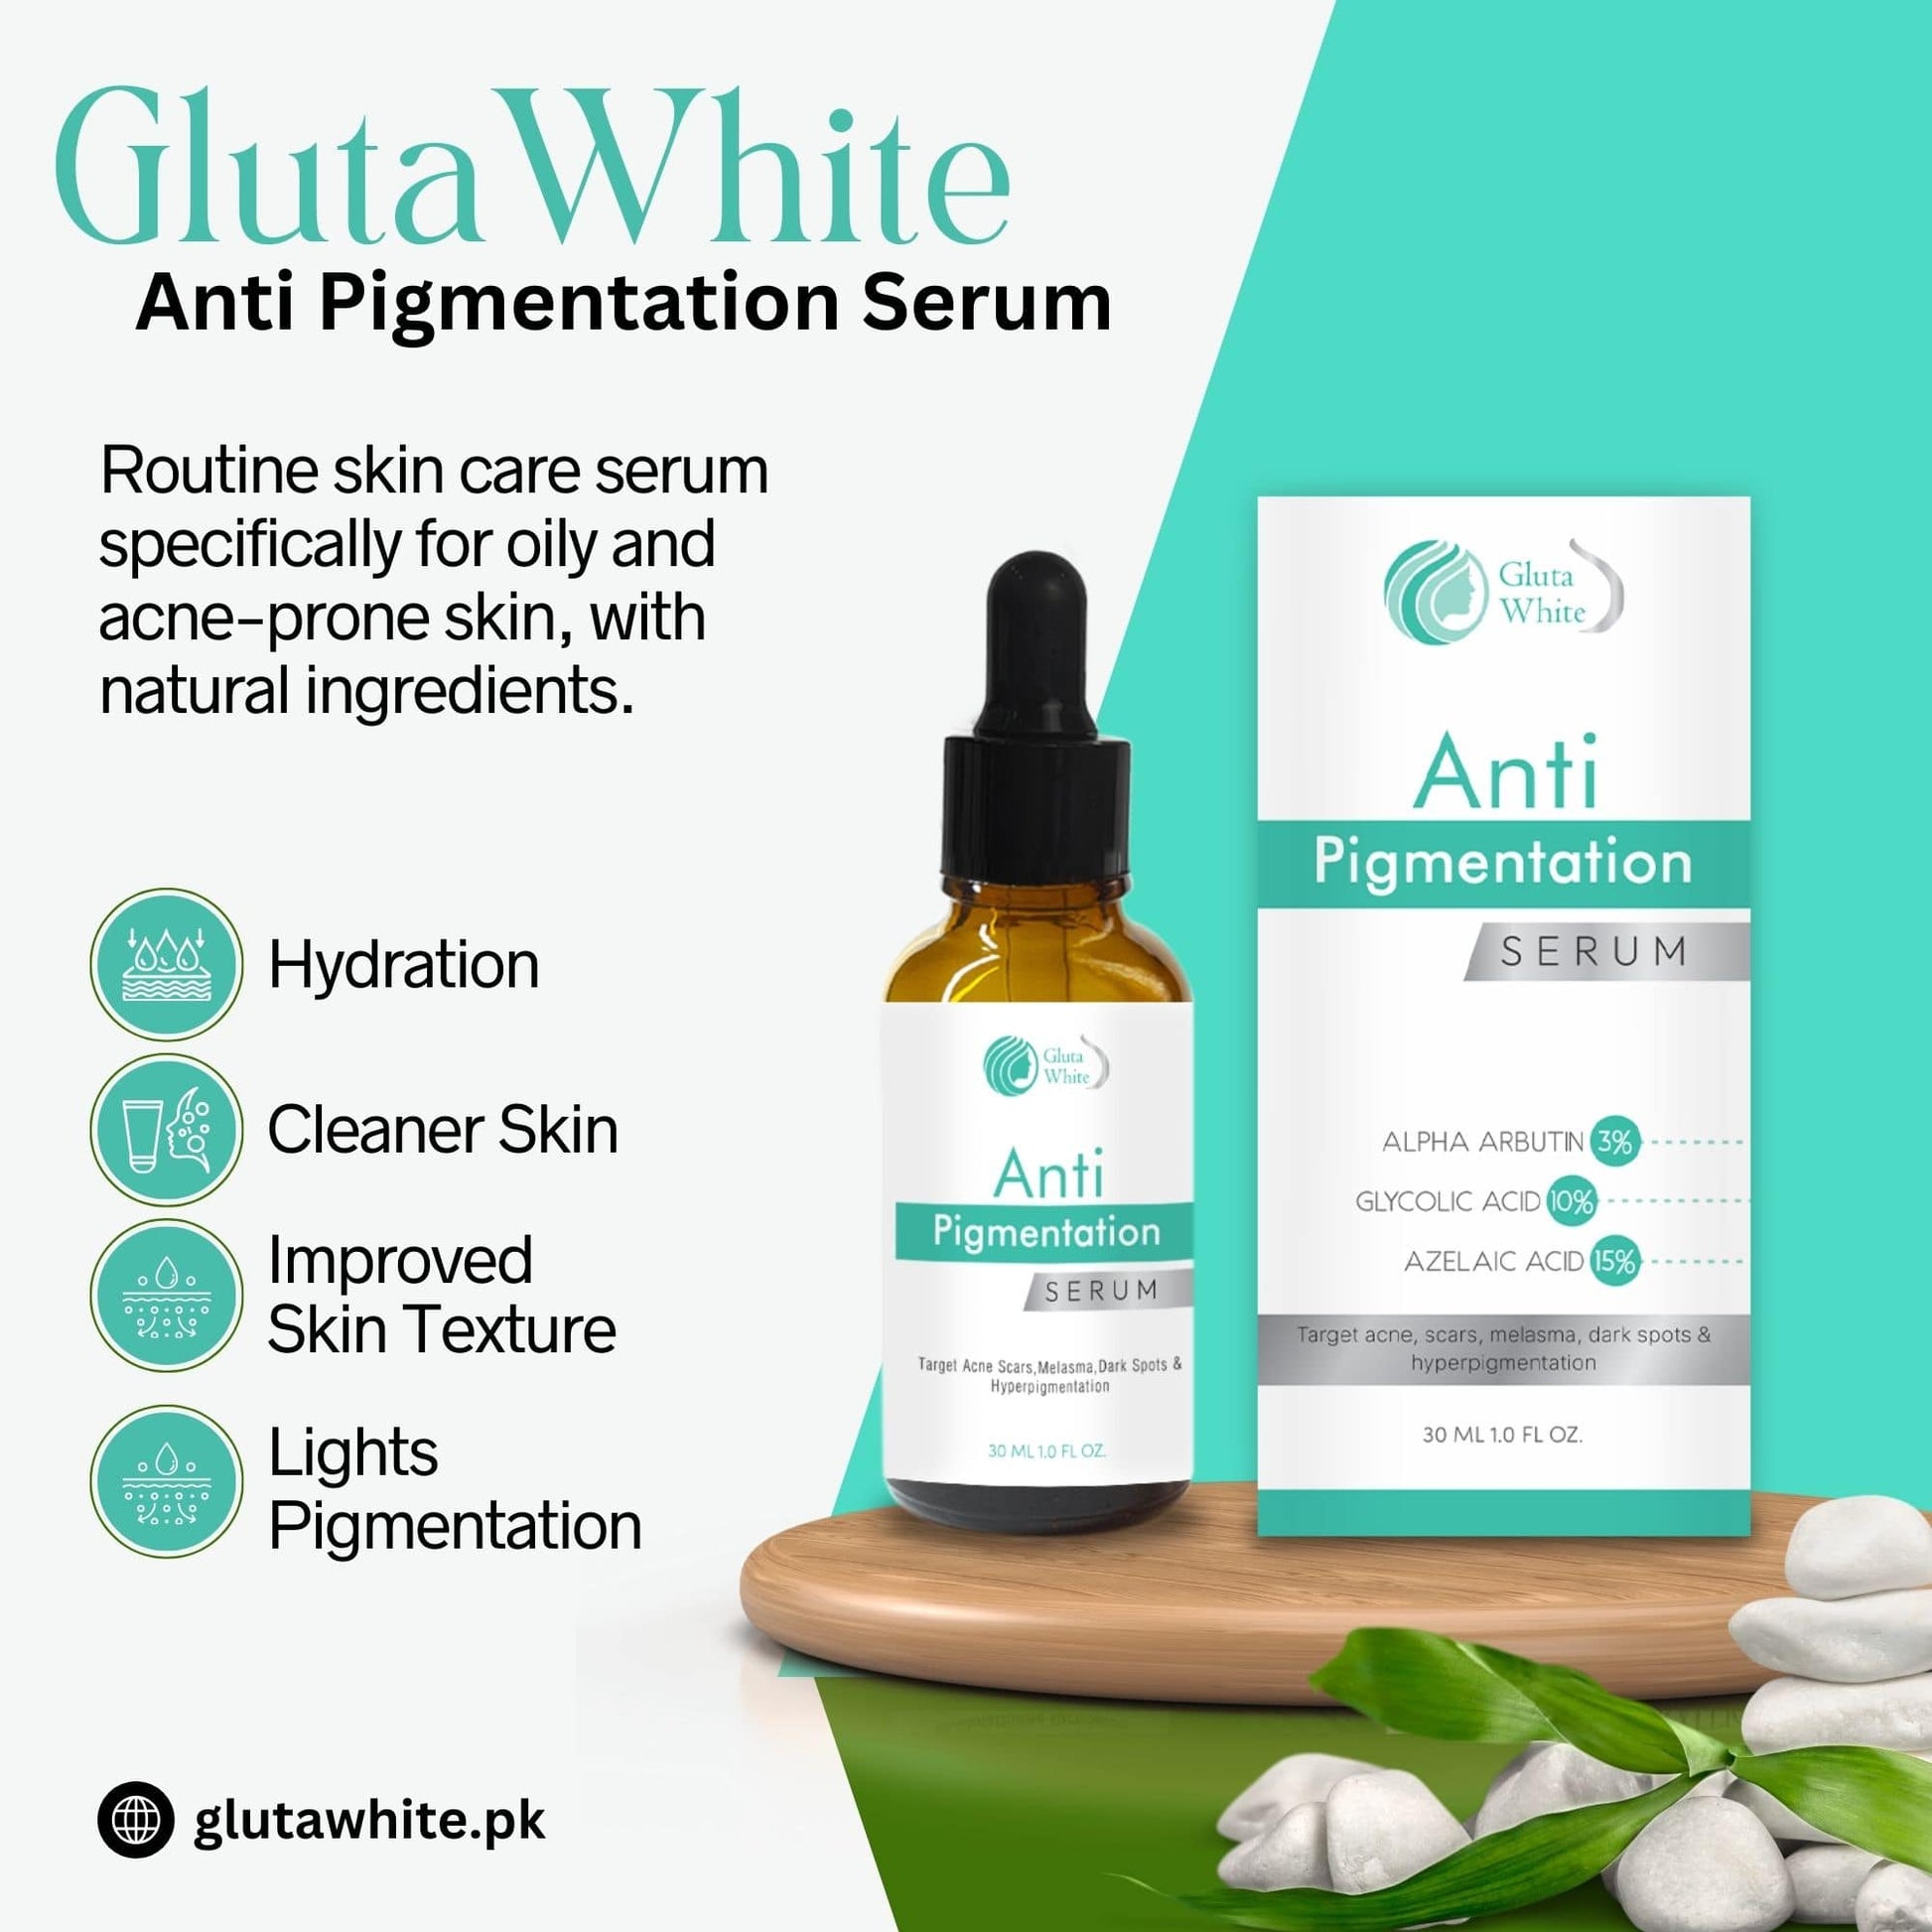 glutawhite anti pigmentation serum price